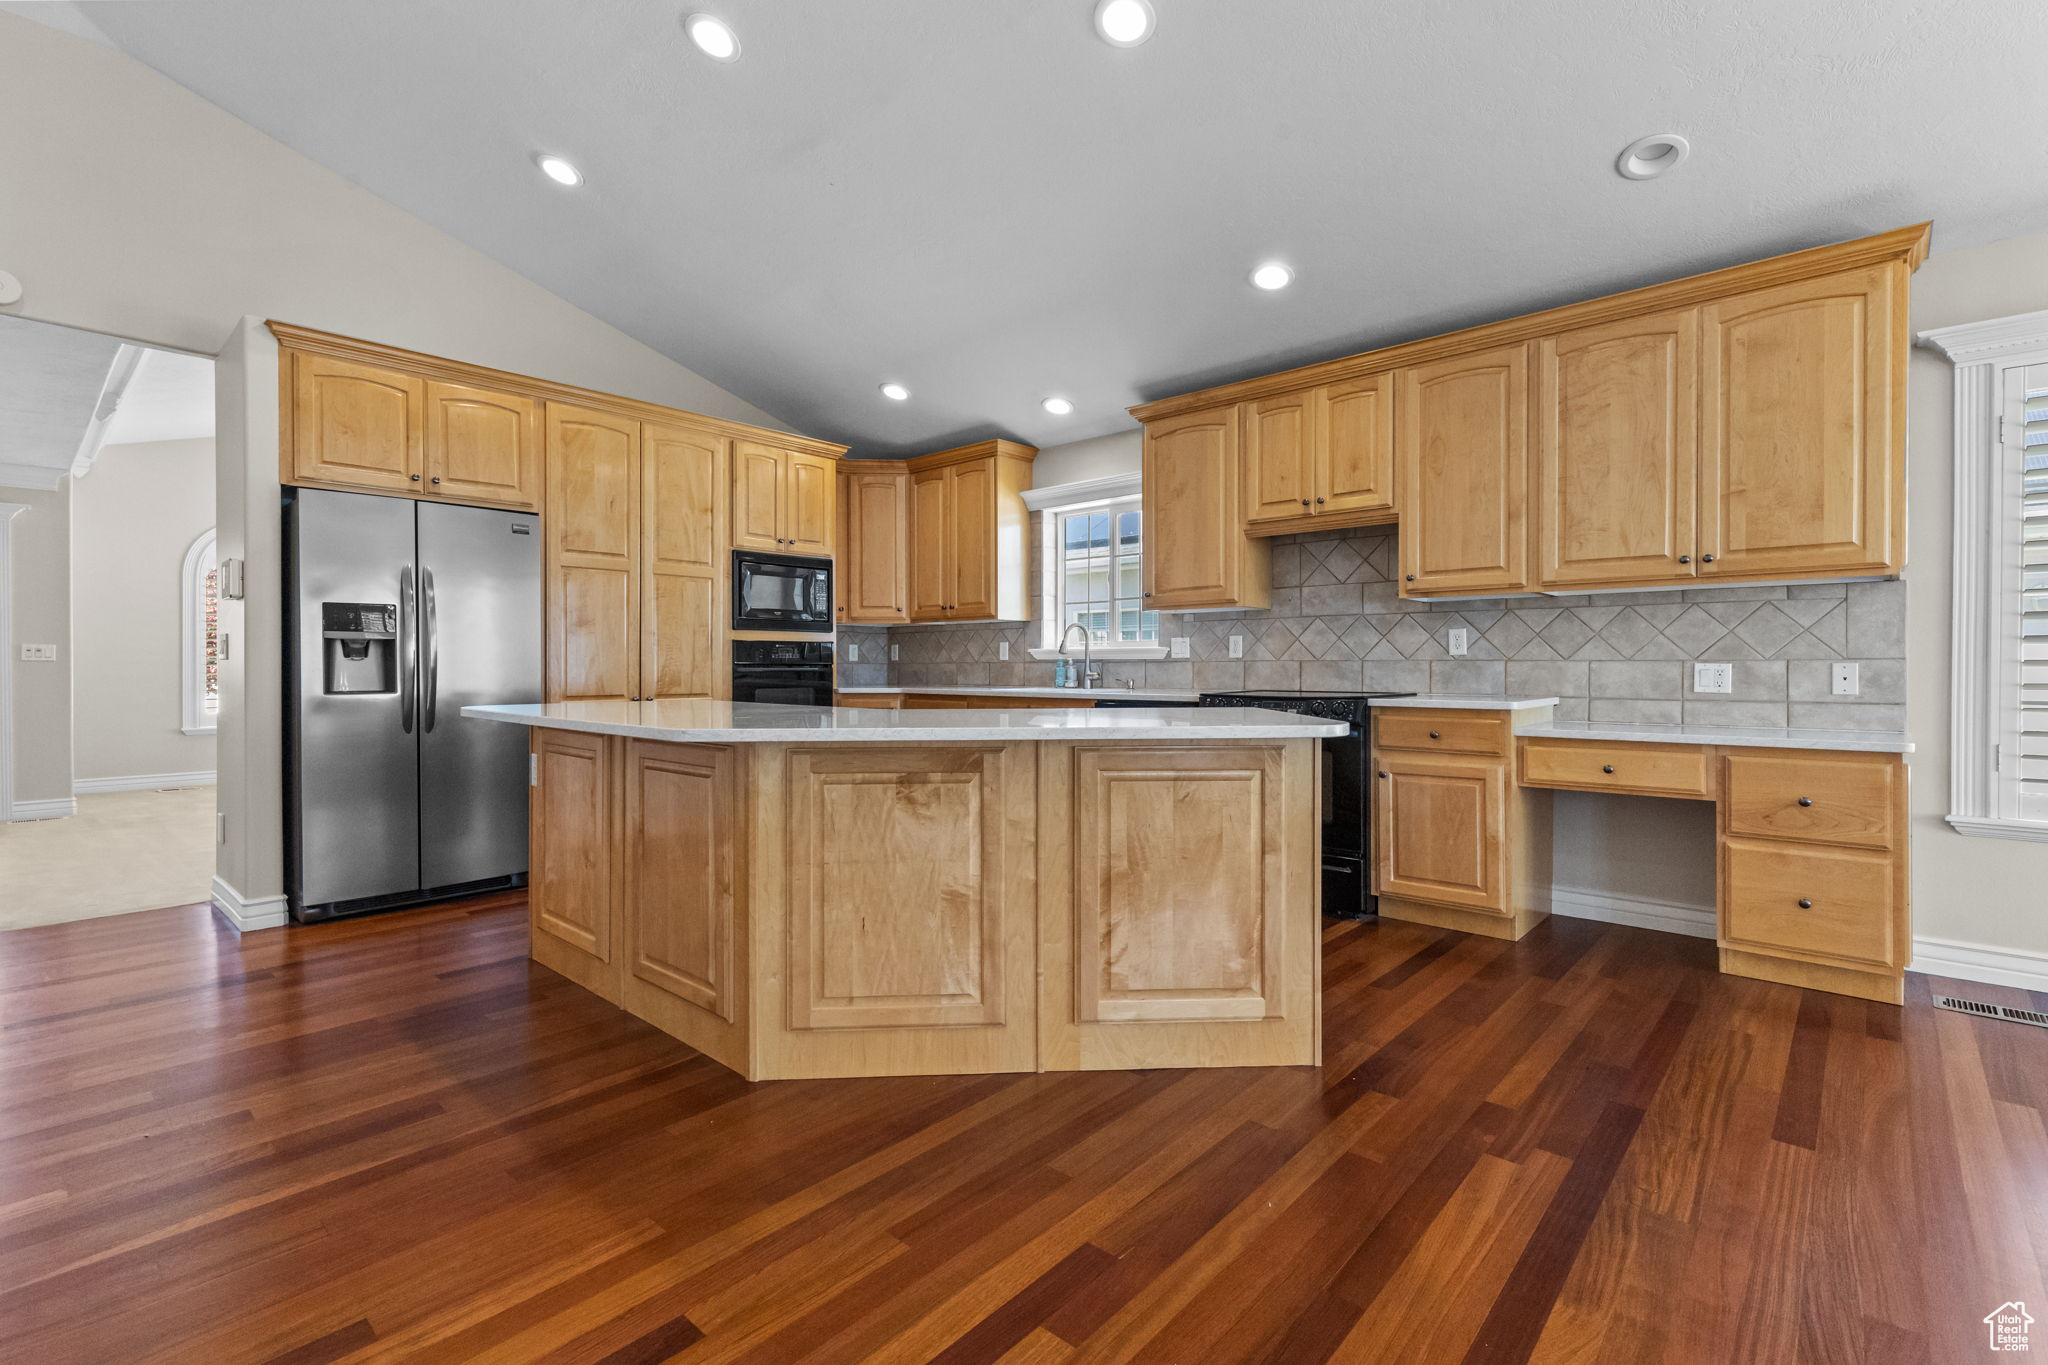 Kitchen featuring backsplash, stainless steel fridge with ice dispenser, a kitchen island, and dark wood-type flooring